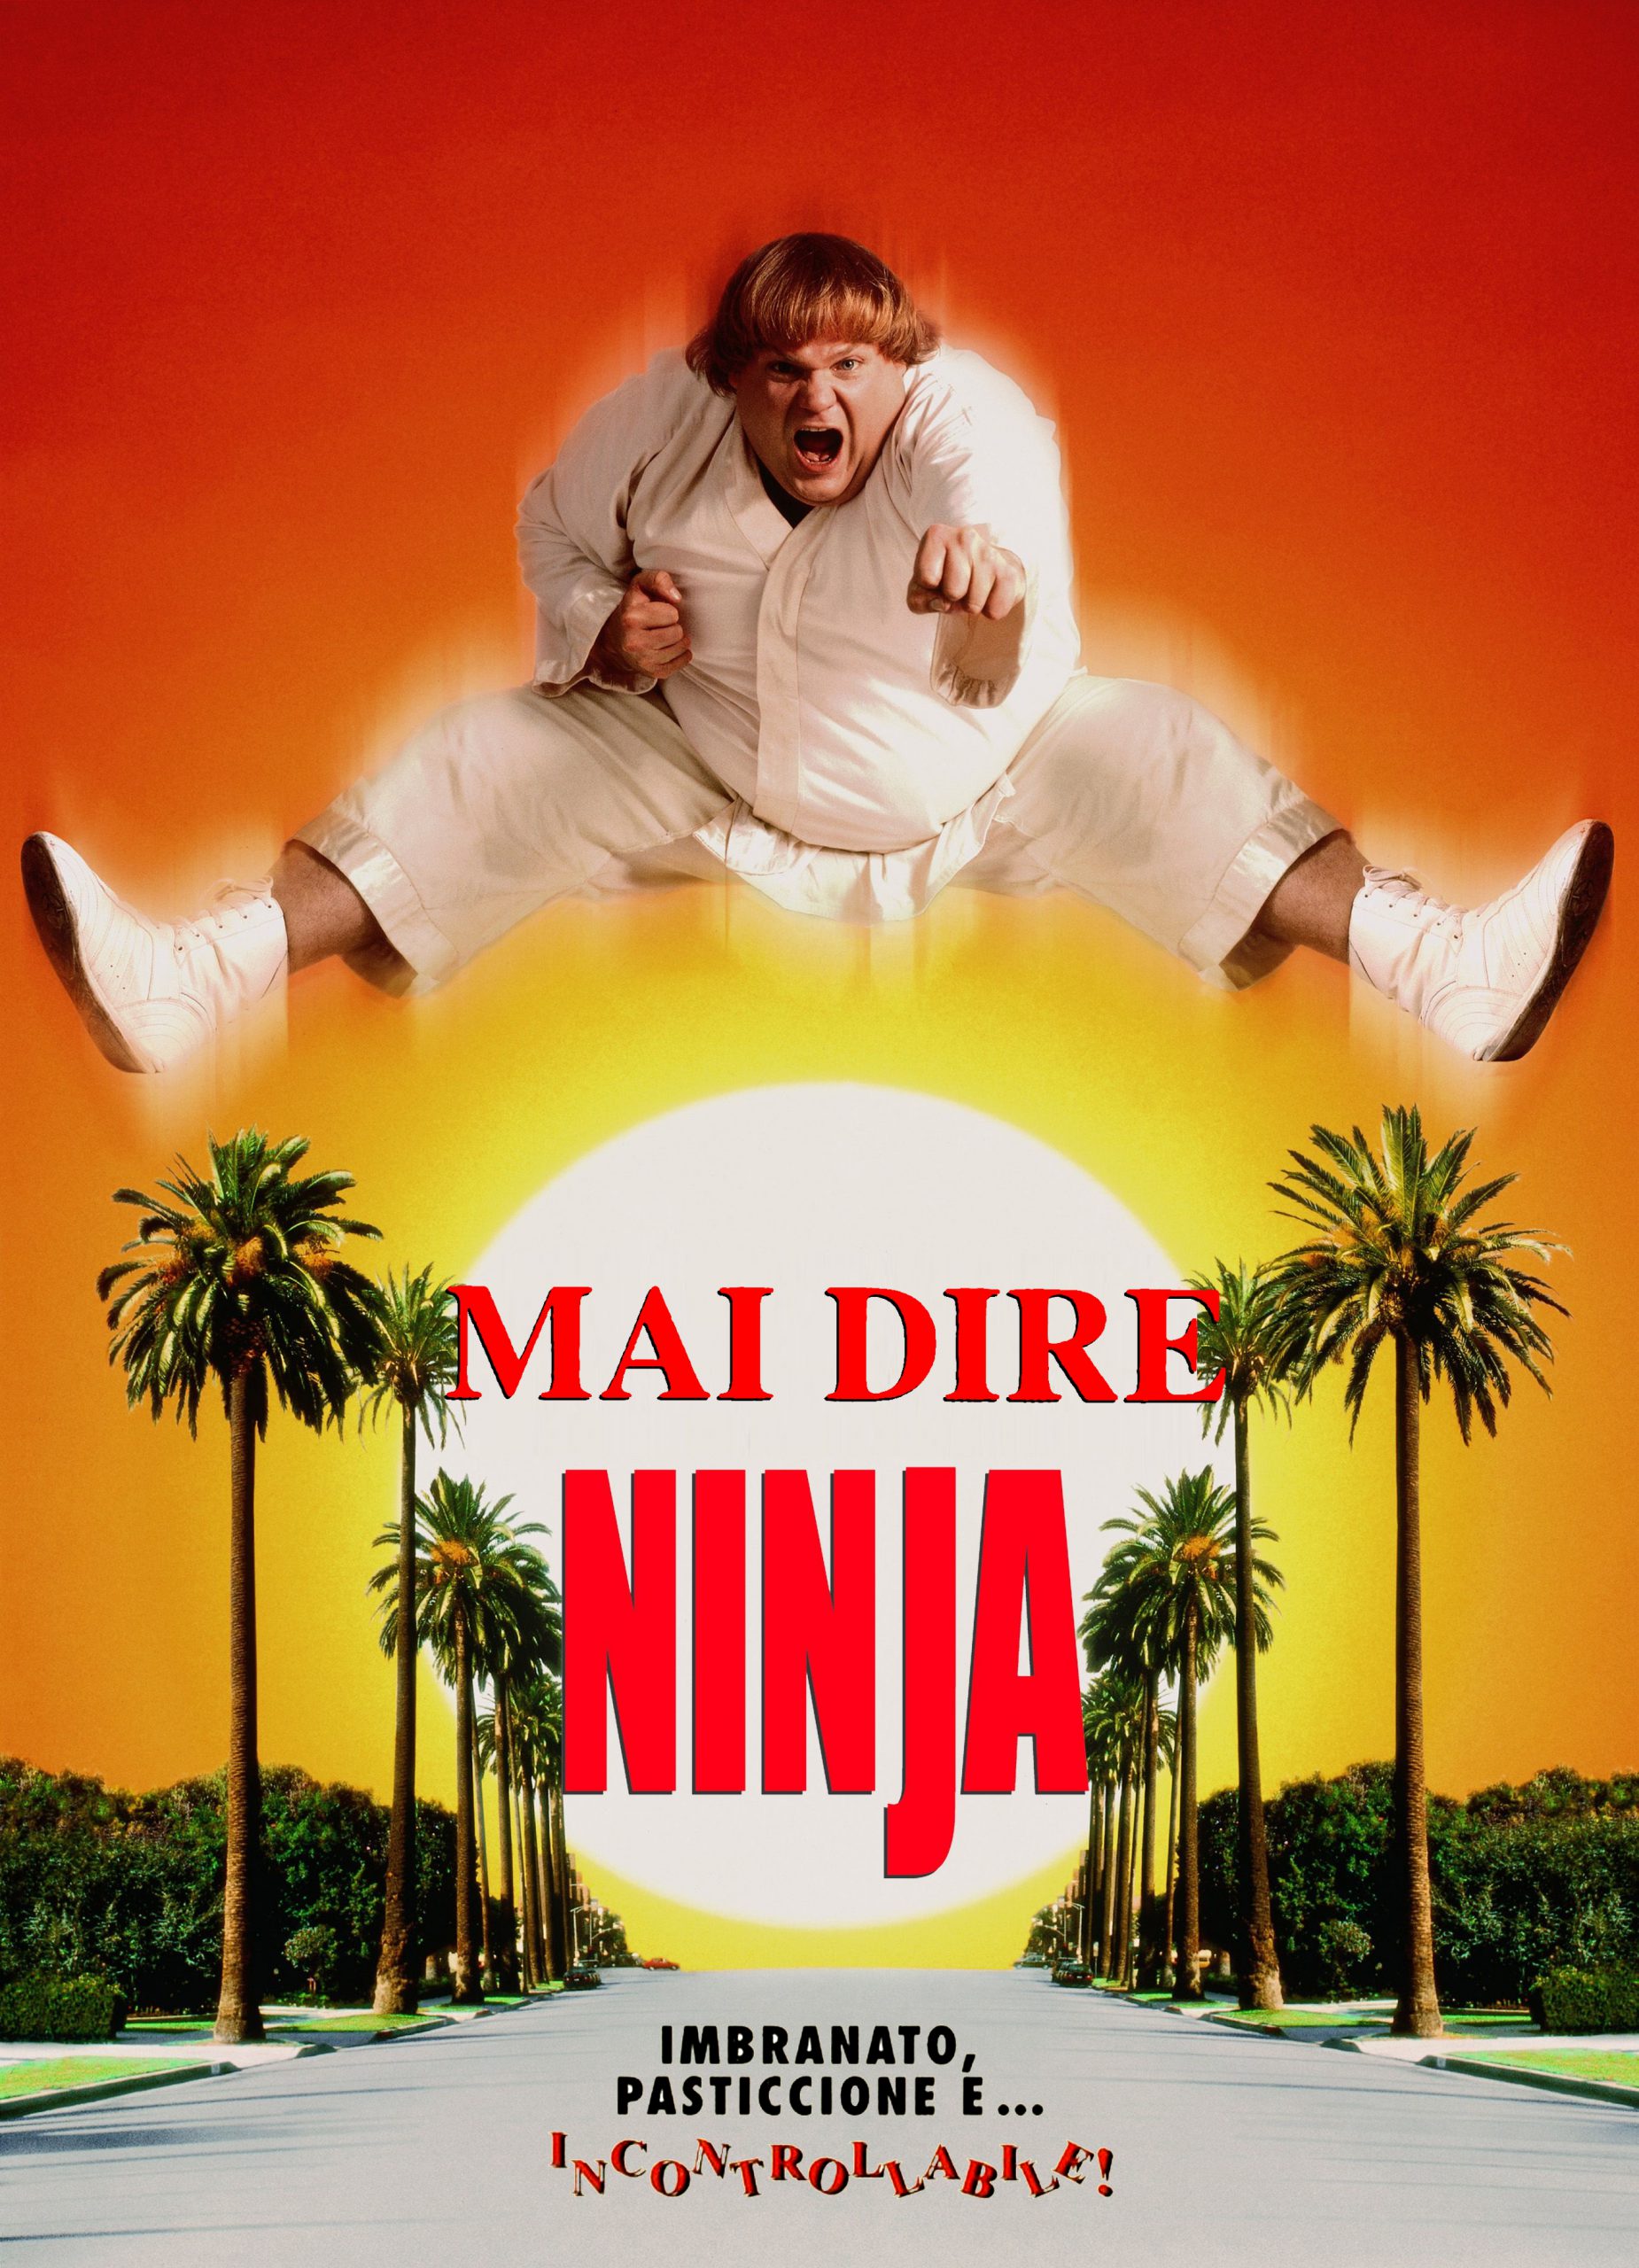 Mai dire ninja [HD] (1997)